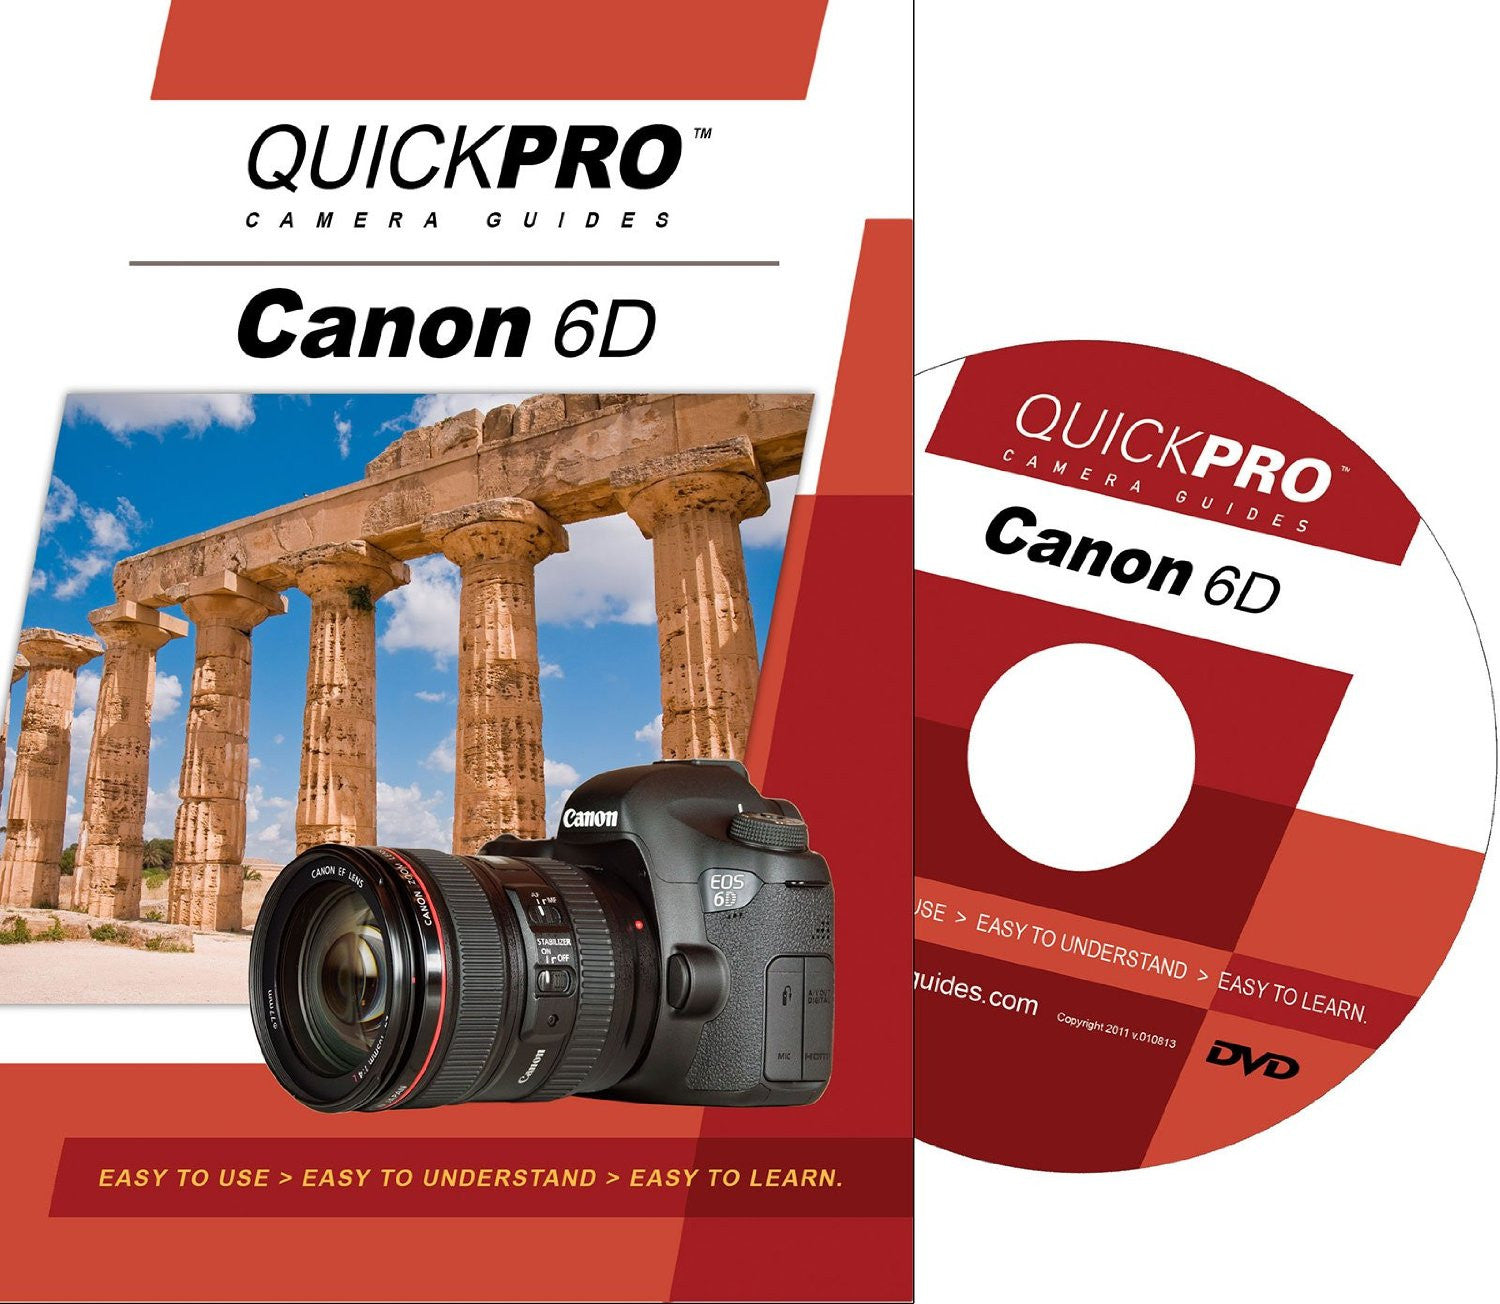 QuickPro Camera Guides Canon 6D DVD, camera books, QuickPro Guides - Pictureline 